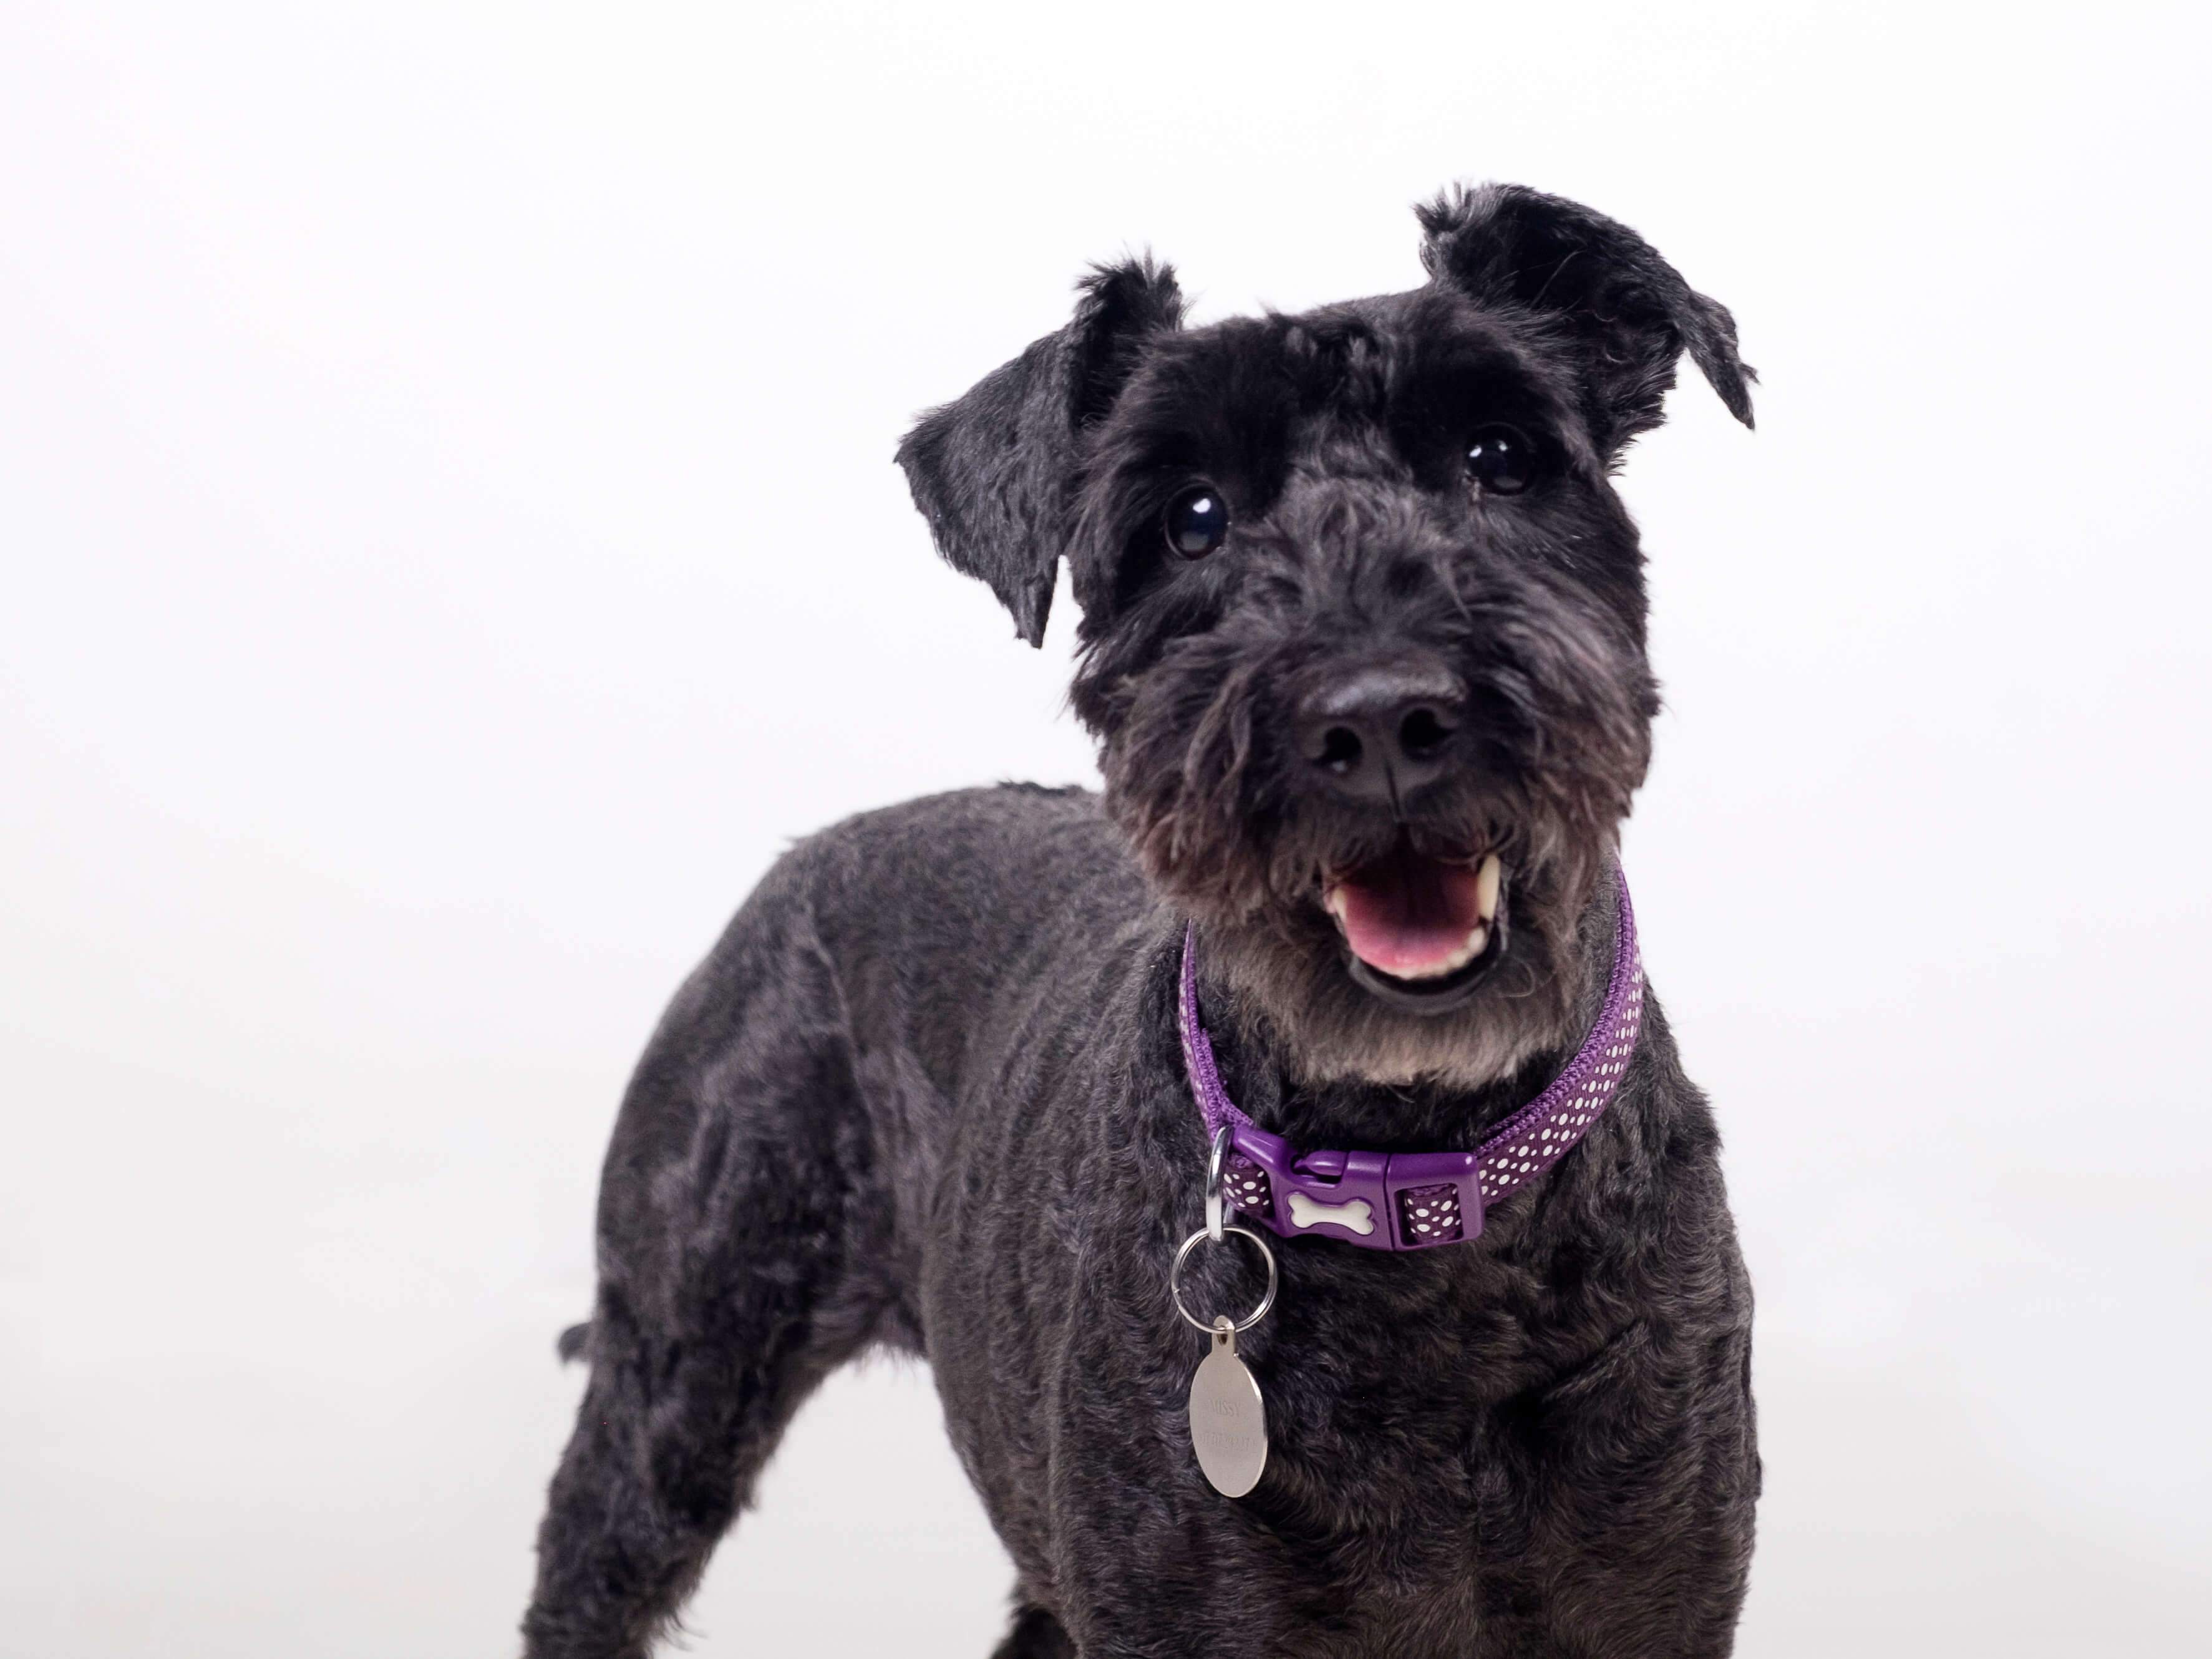 A black dog with a purple collar